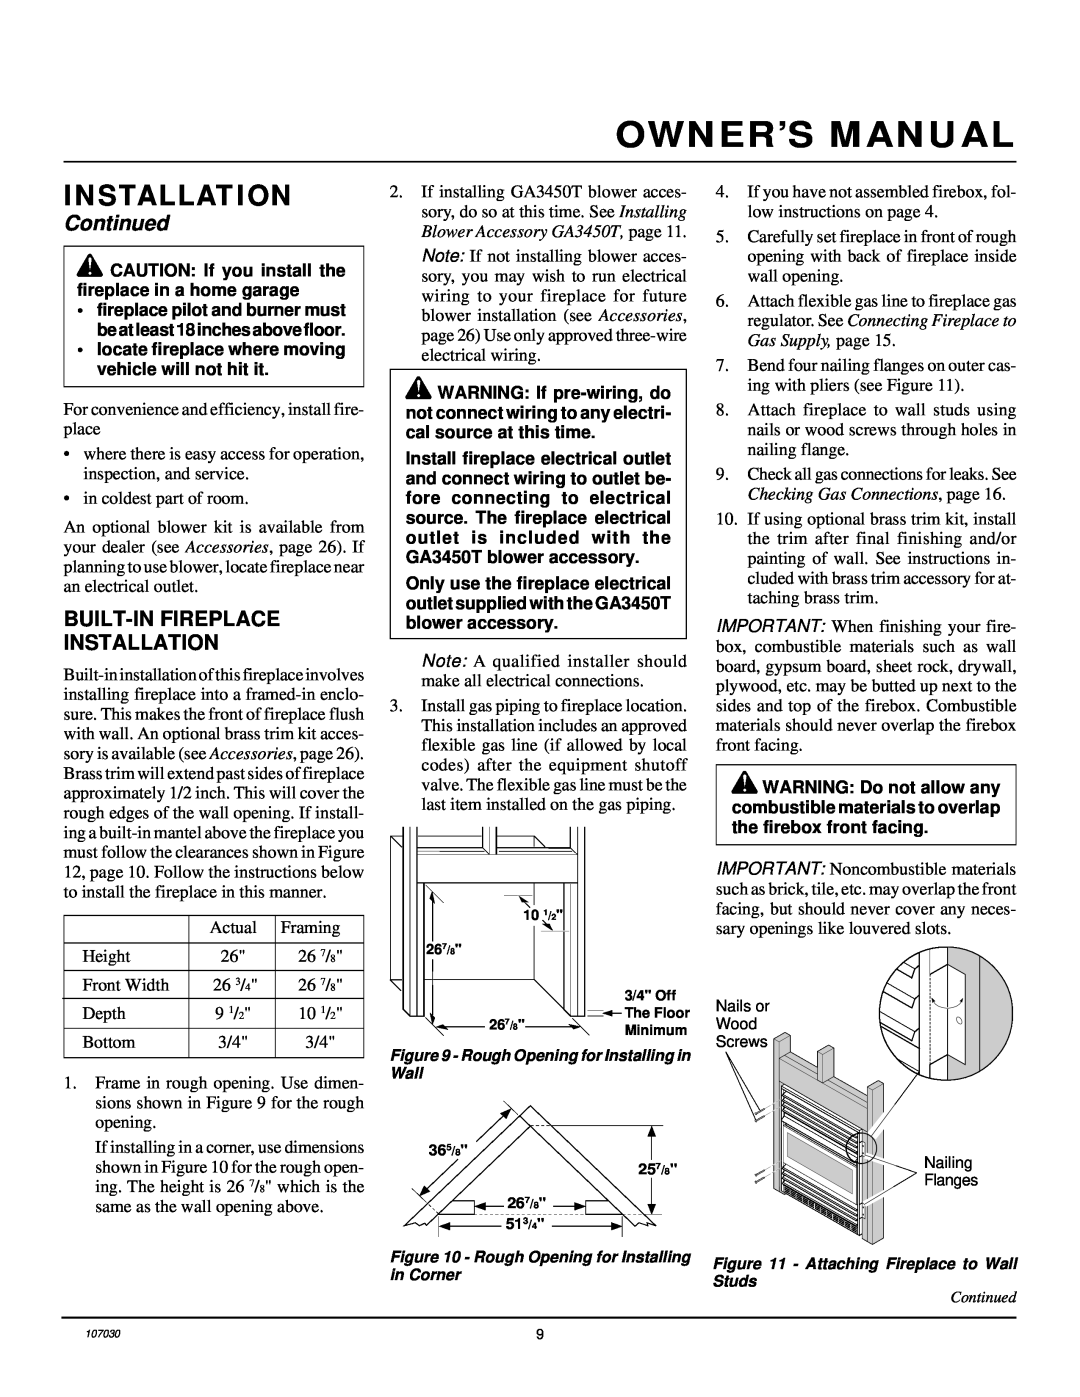 Desa VMH26TPB 14 installation manual Built-Infireplace Installation, Continued 